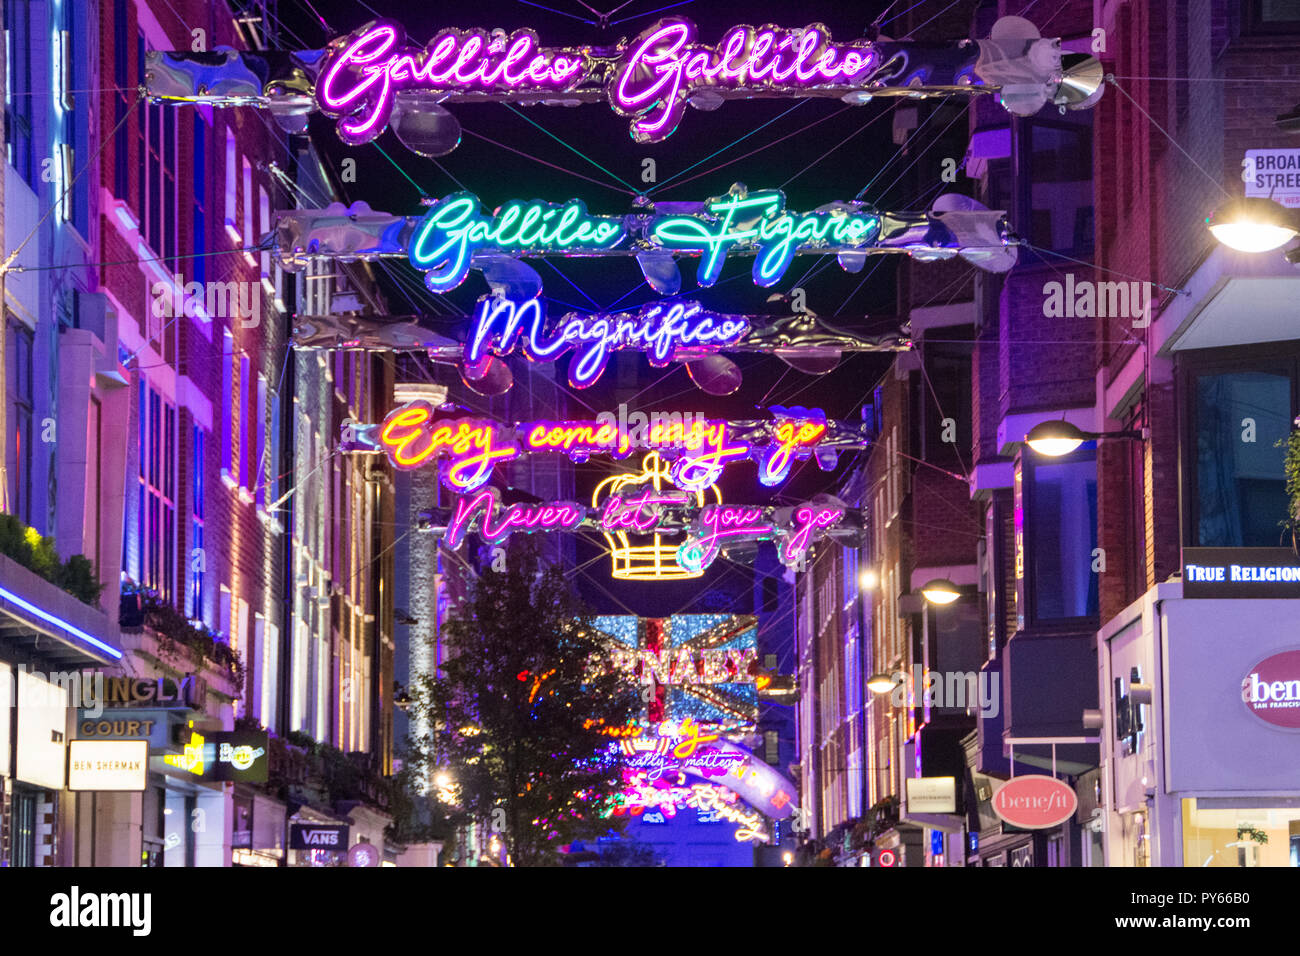 Gallileo, Gallileo -  Queen-inspired Bohemian Rhapsody Christmas lights installation display on Carnaby Street, London, UK Stock Photo